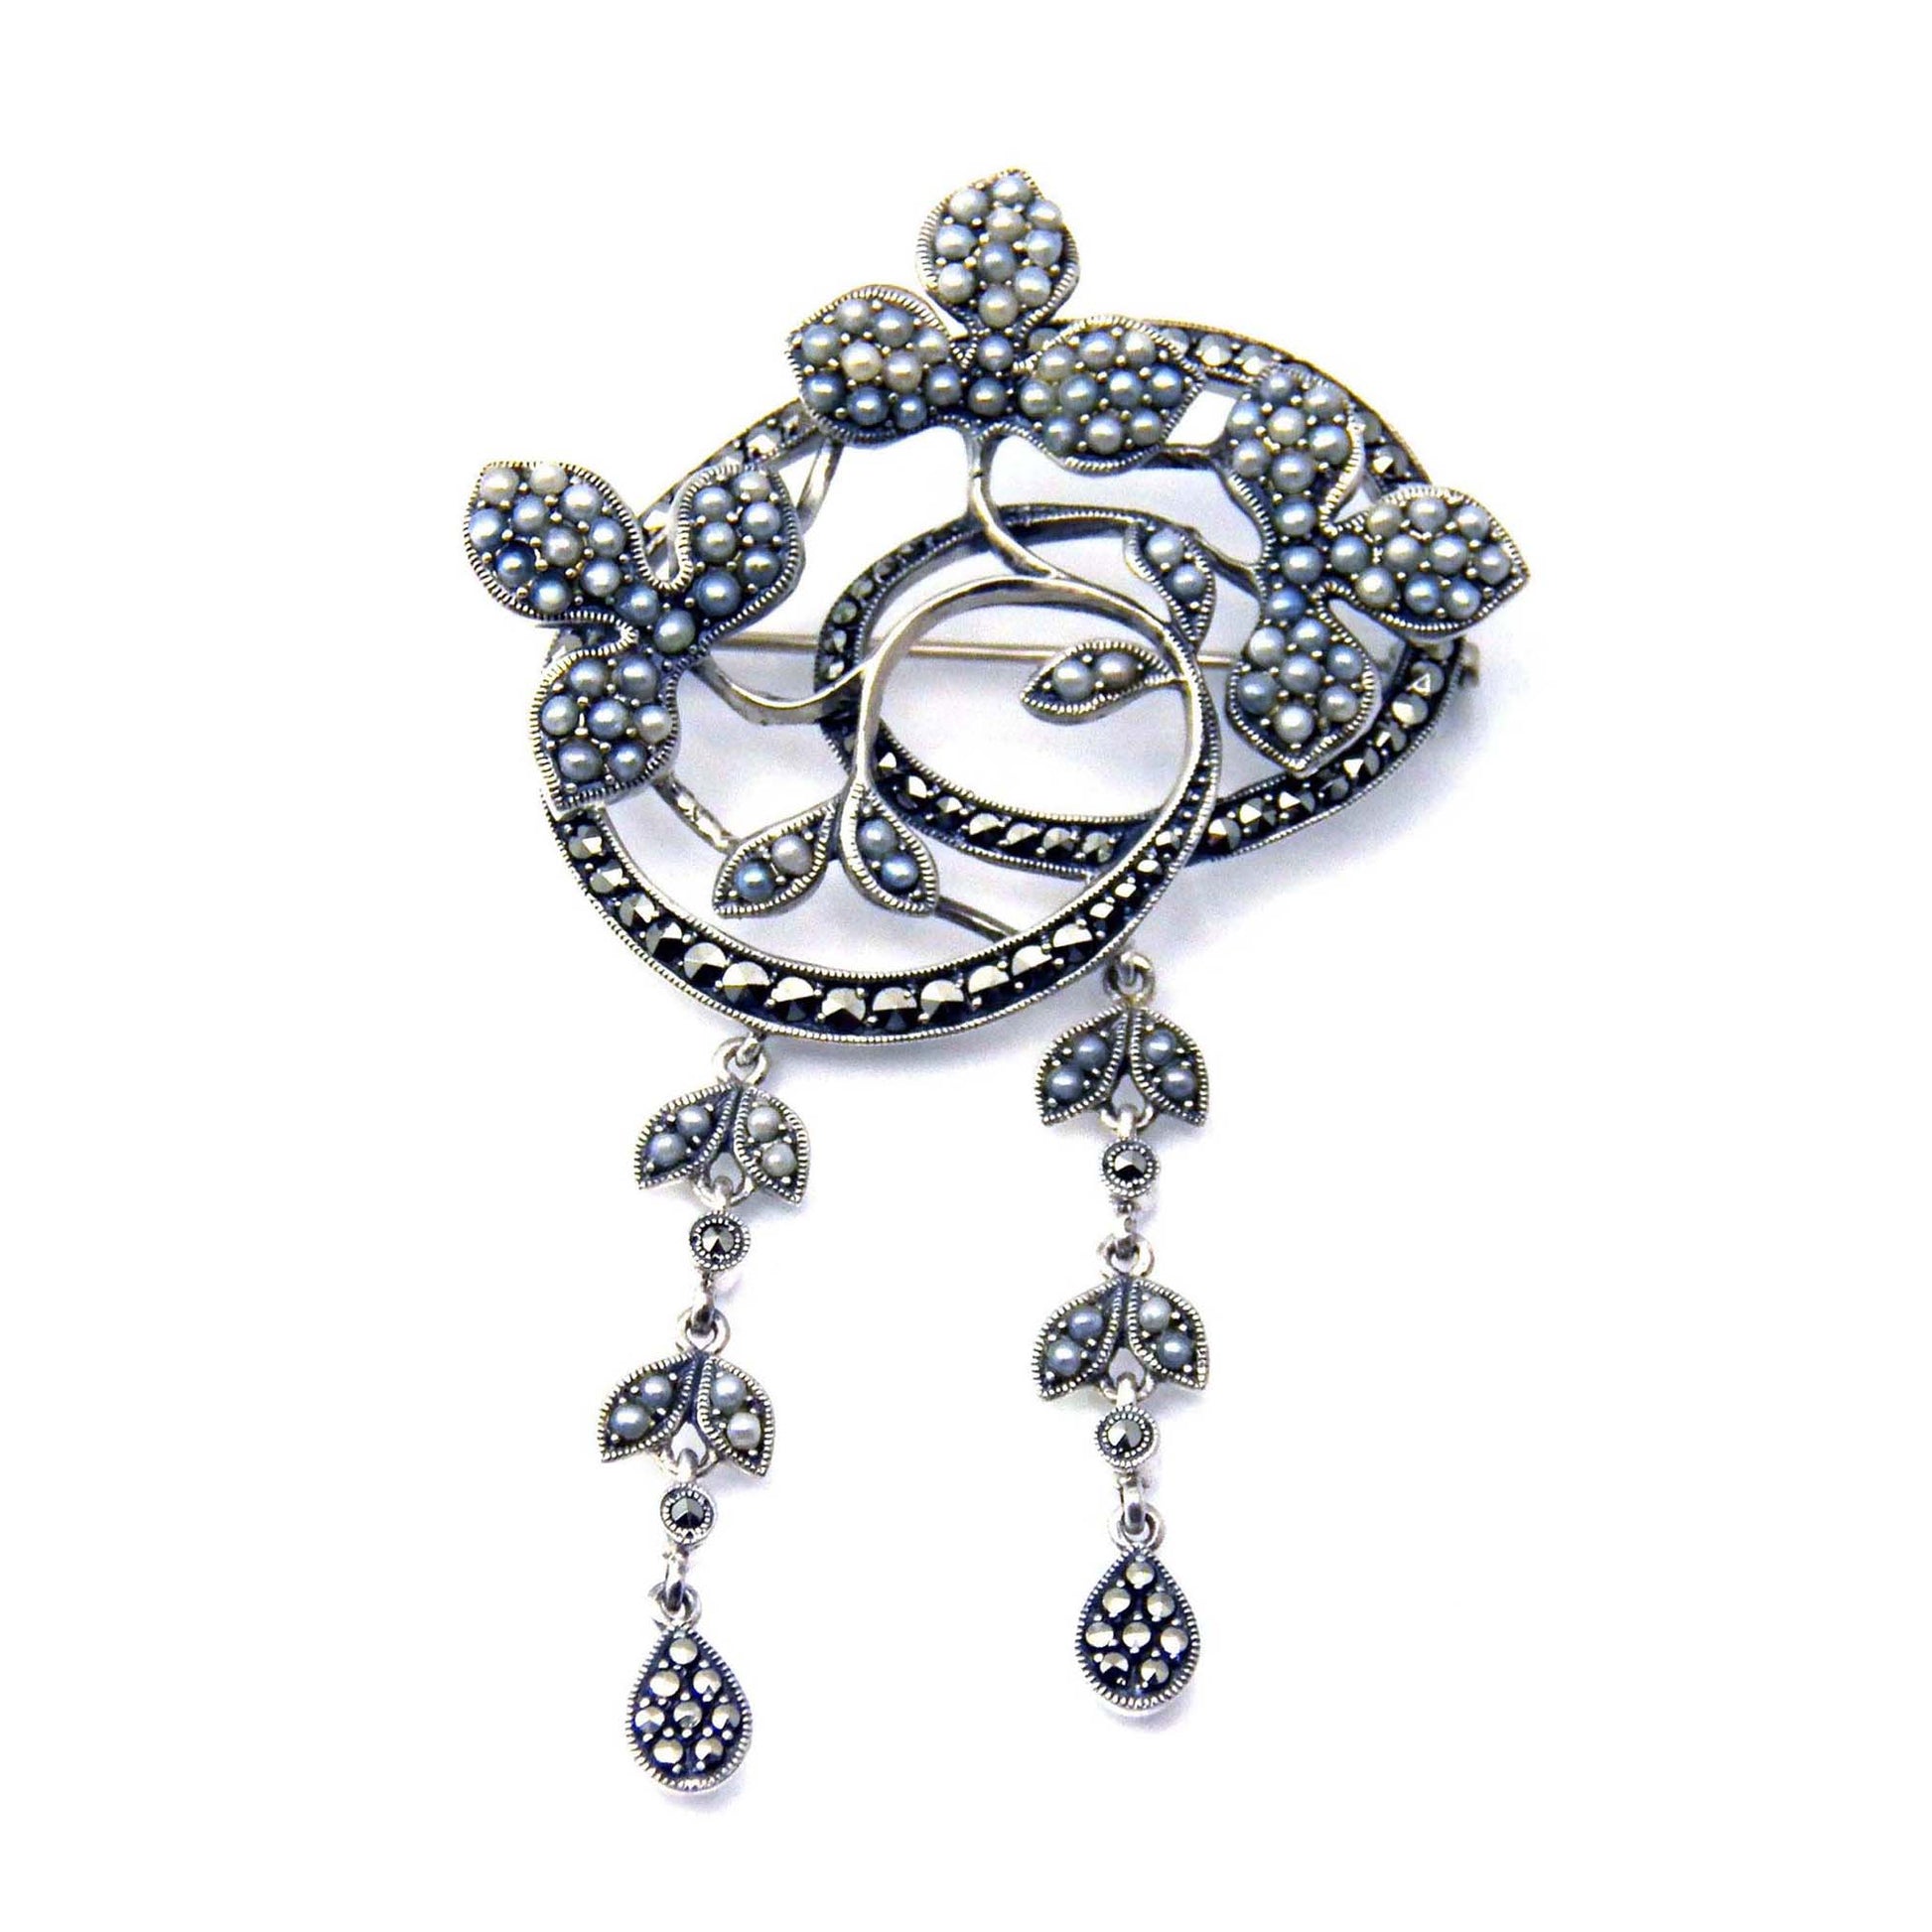 Victorian Revival  Seed pearl brooch in sterling silver